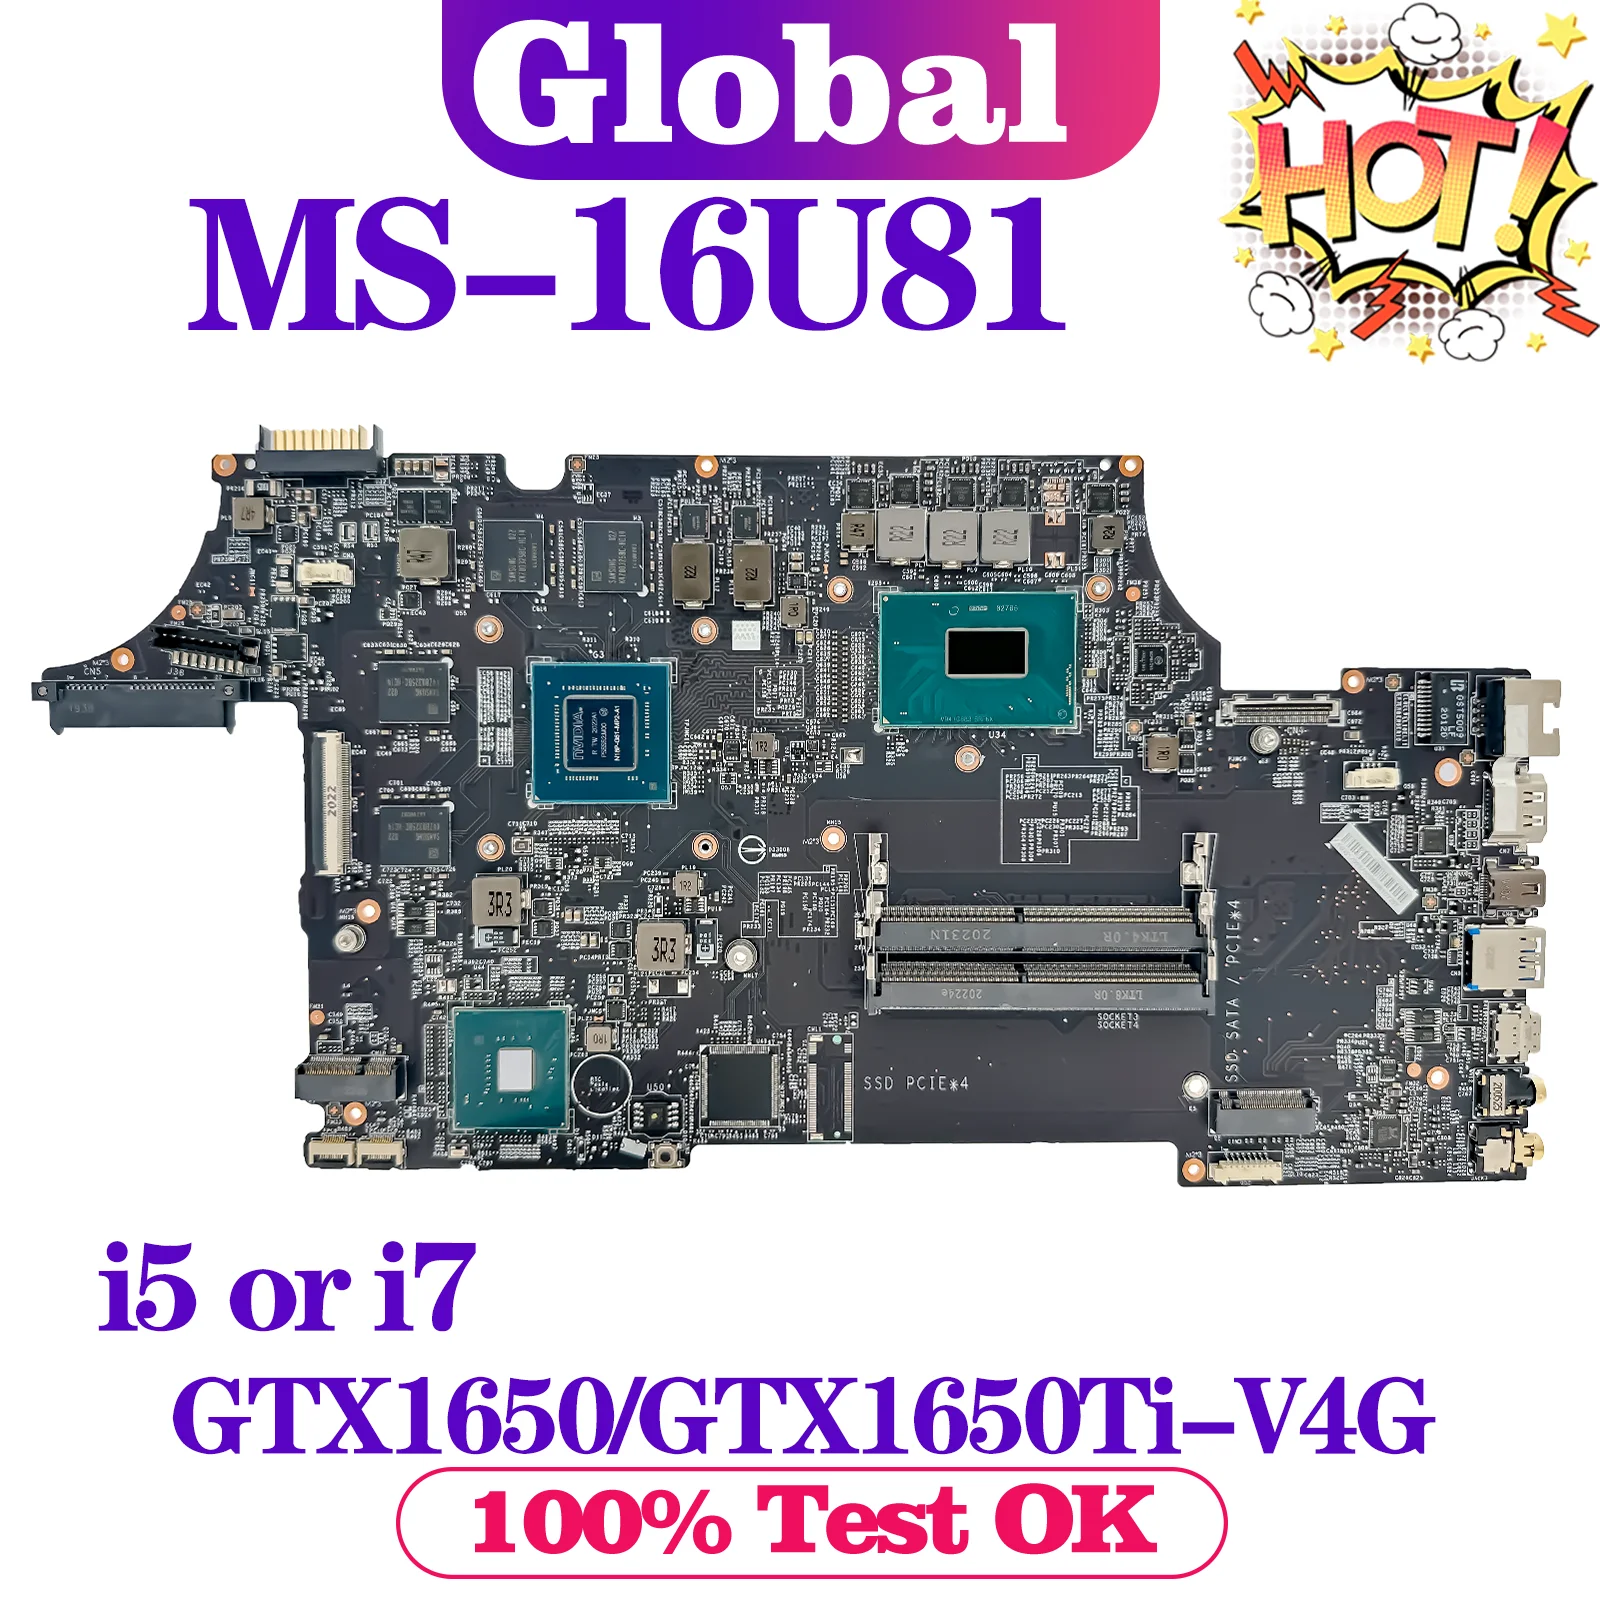 

KEFU Mainboard For MSI MS-16U81 MS-16U8 Laptop Motherboard i5 i7 9th Gen GTX1650/GTX1650Ti-V4G